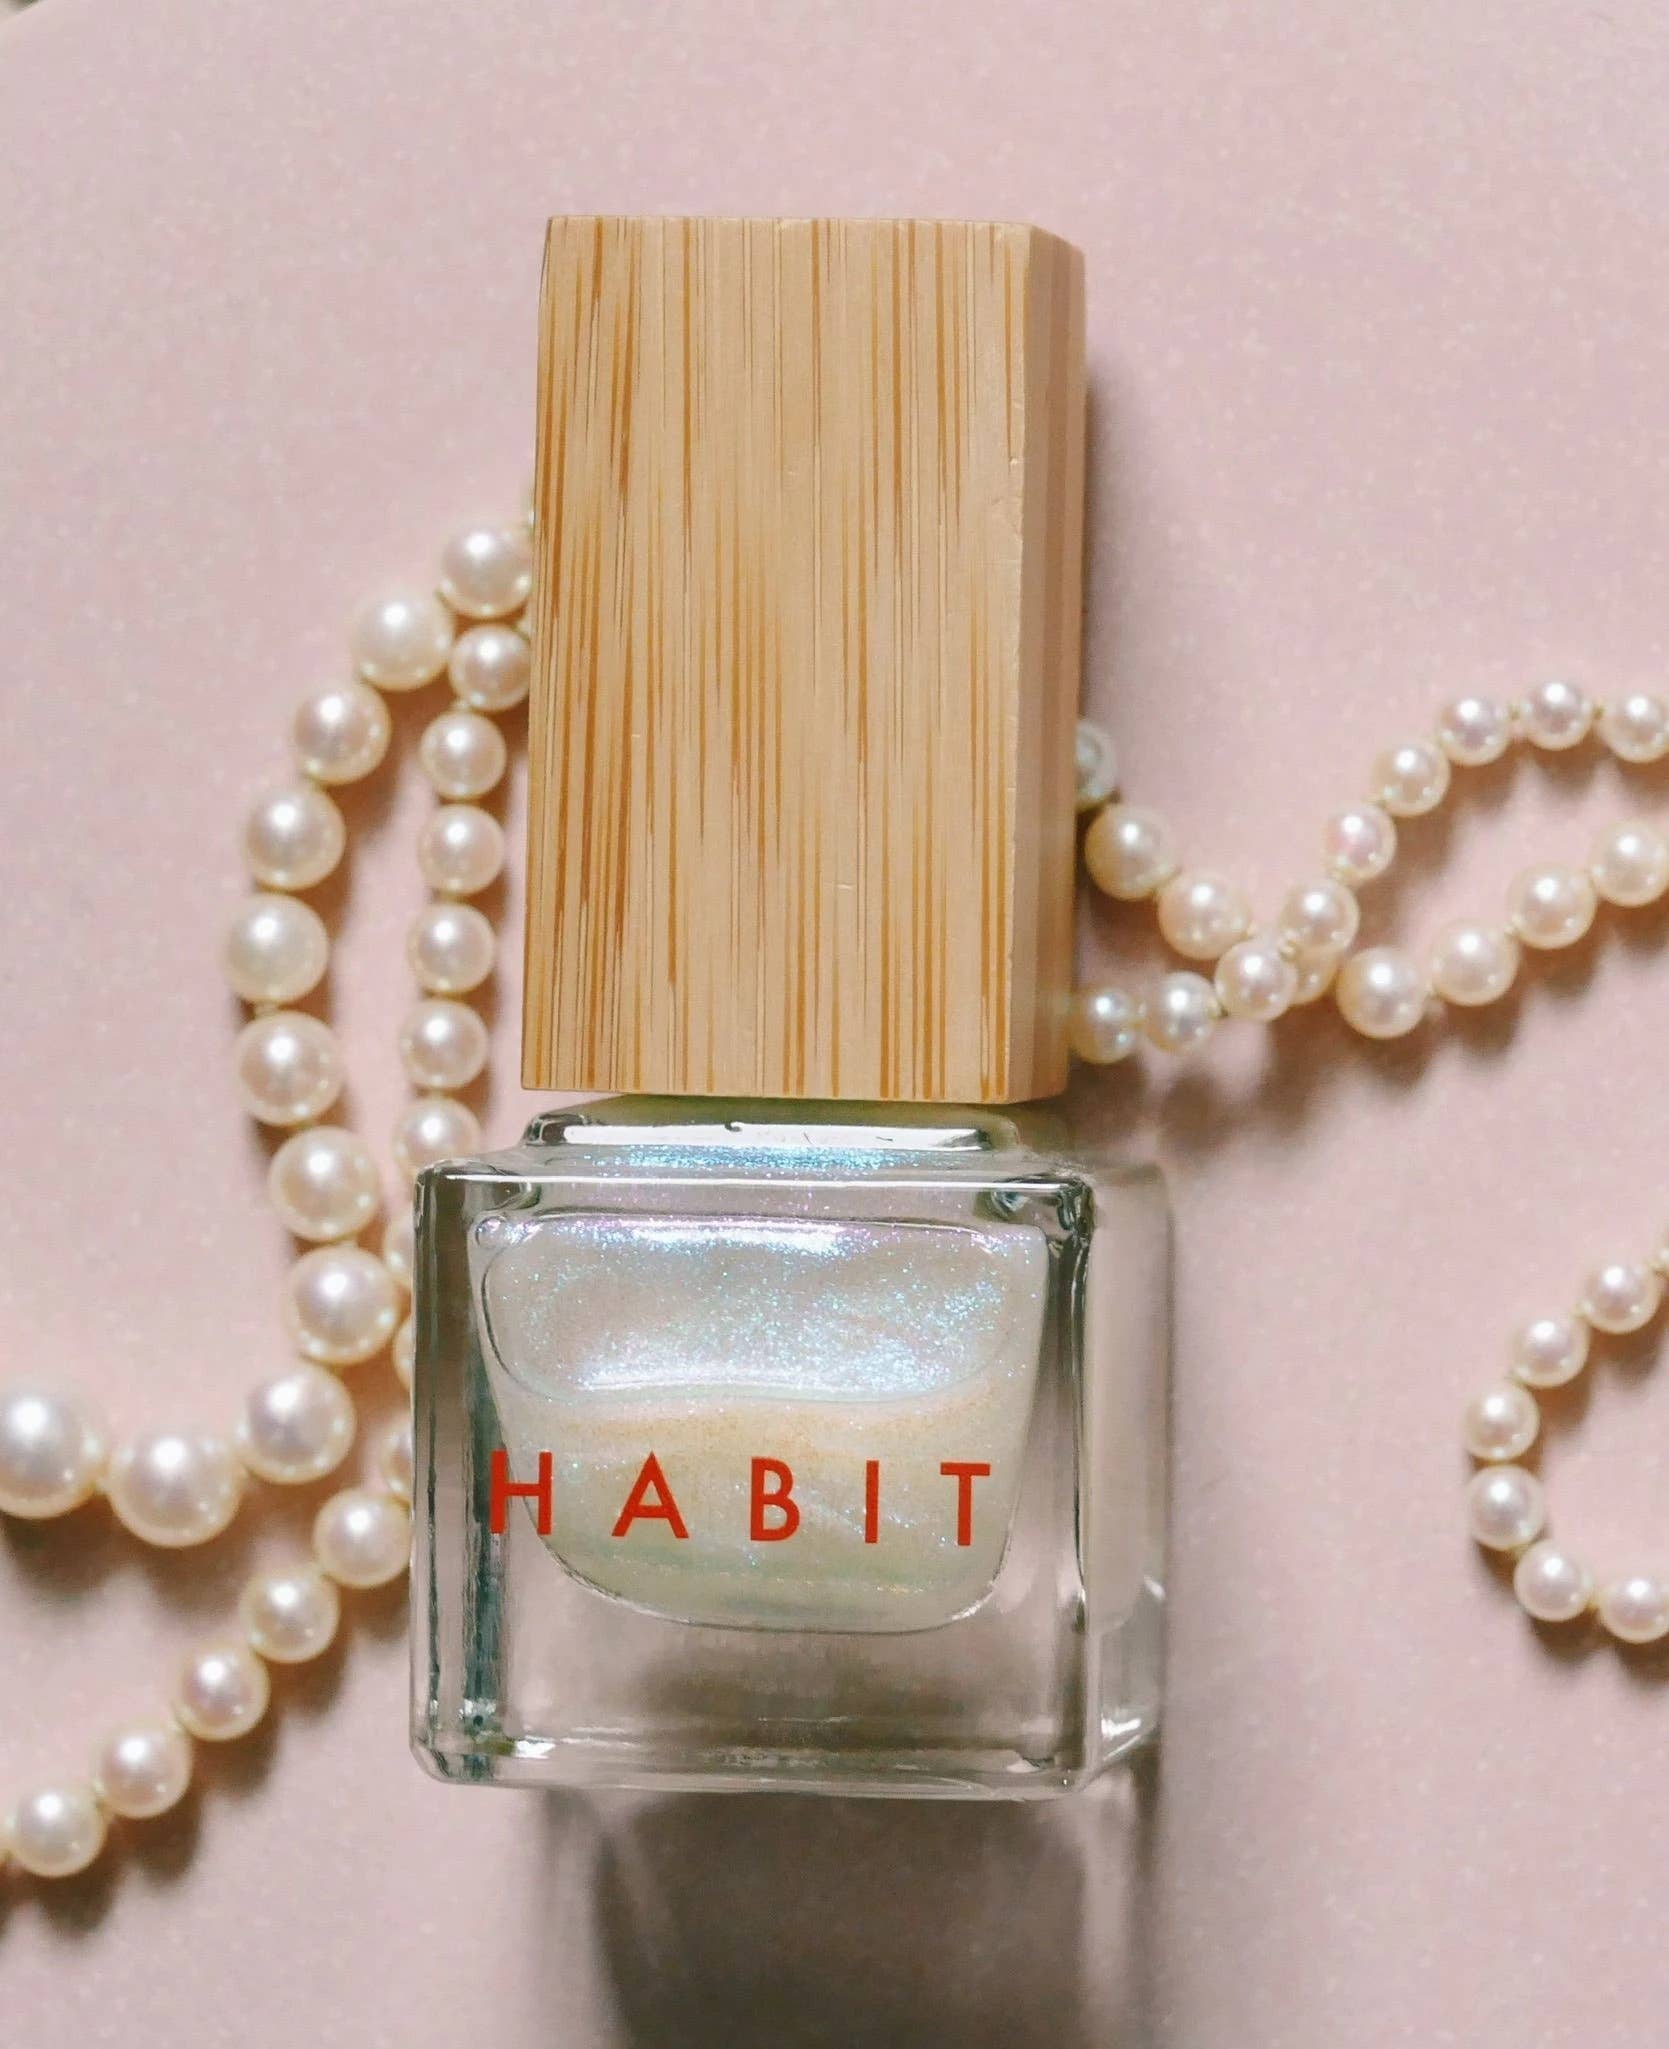 Habit Cosmetics Nail Polish - 11 Pearl of a Girl